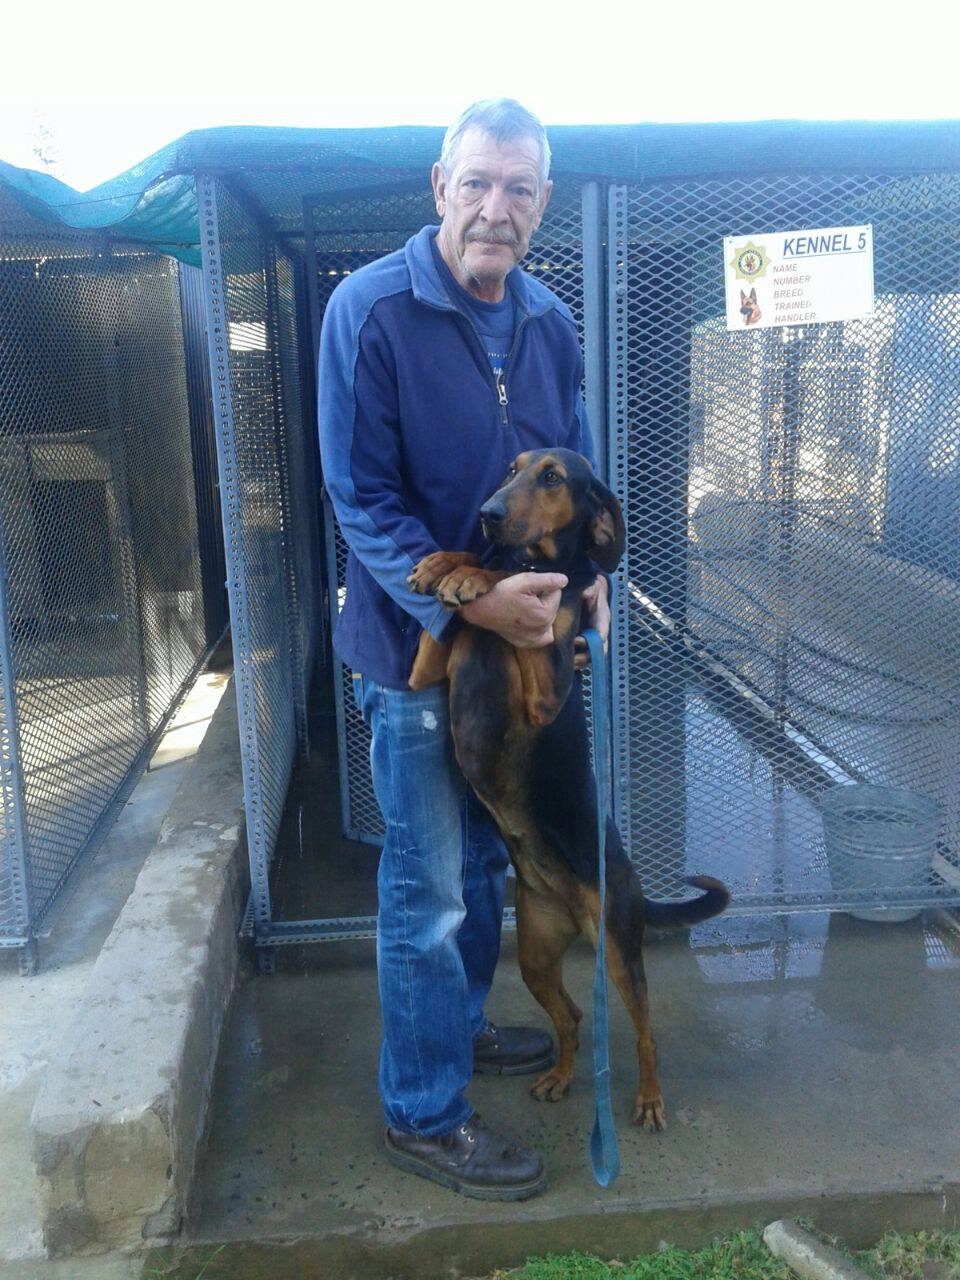 Bloemfontein dog handler bids farewell to SAPS after 43 years of service